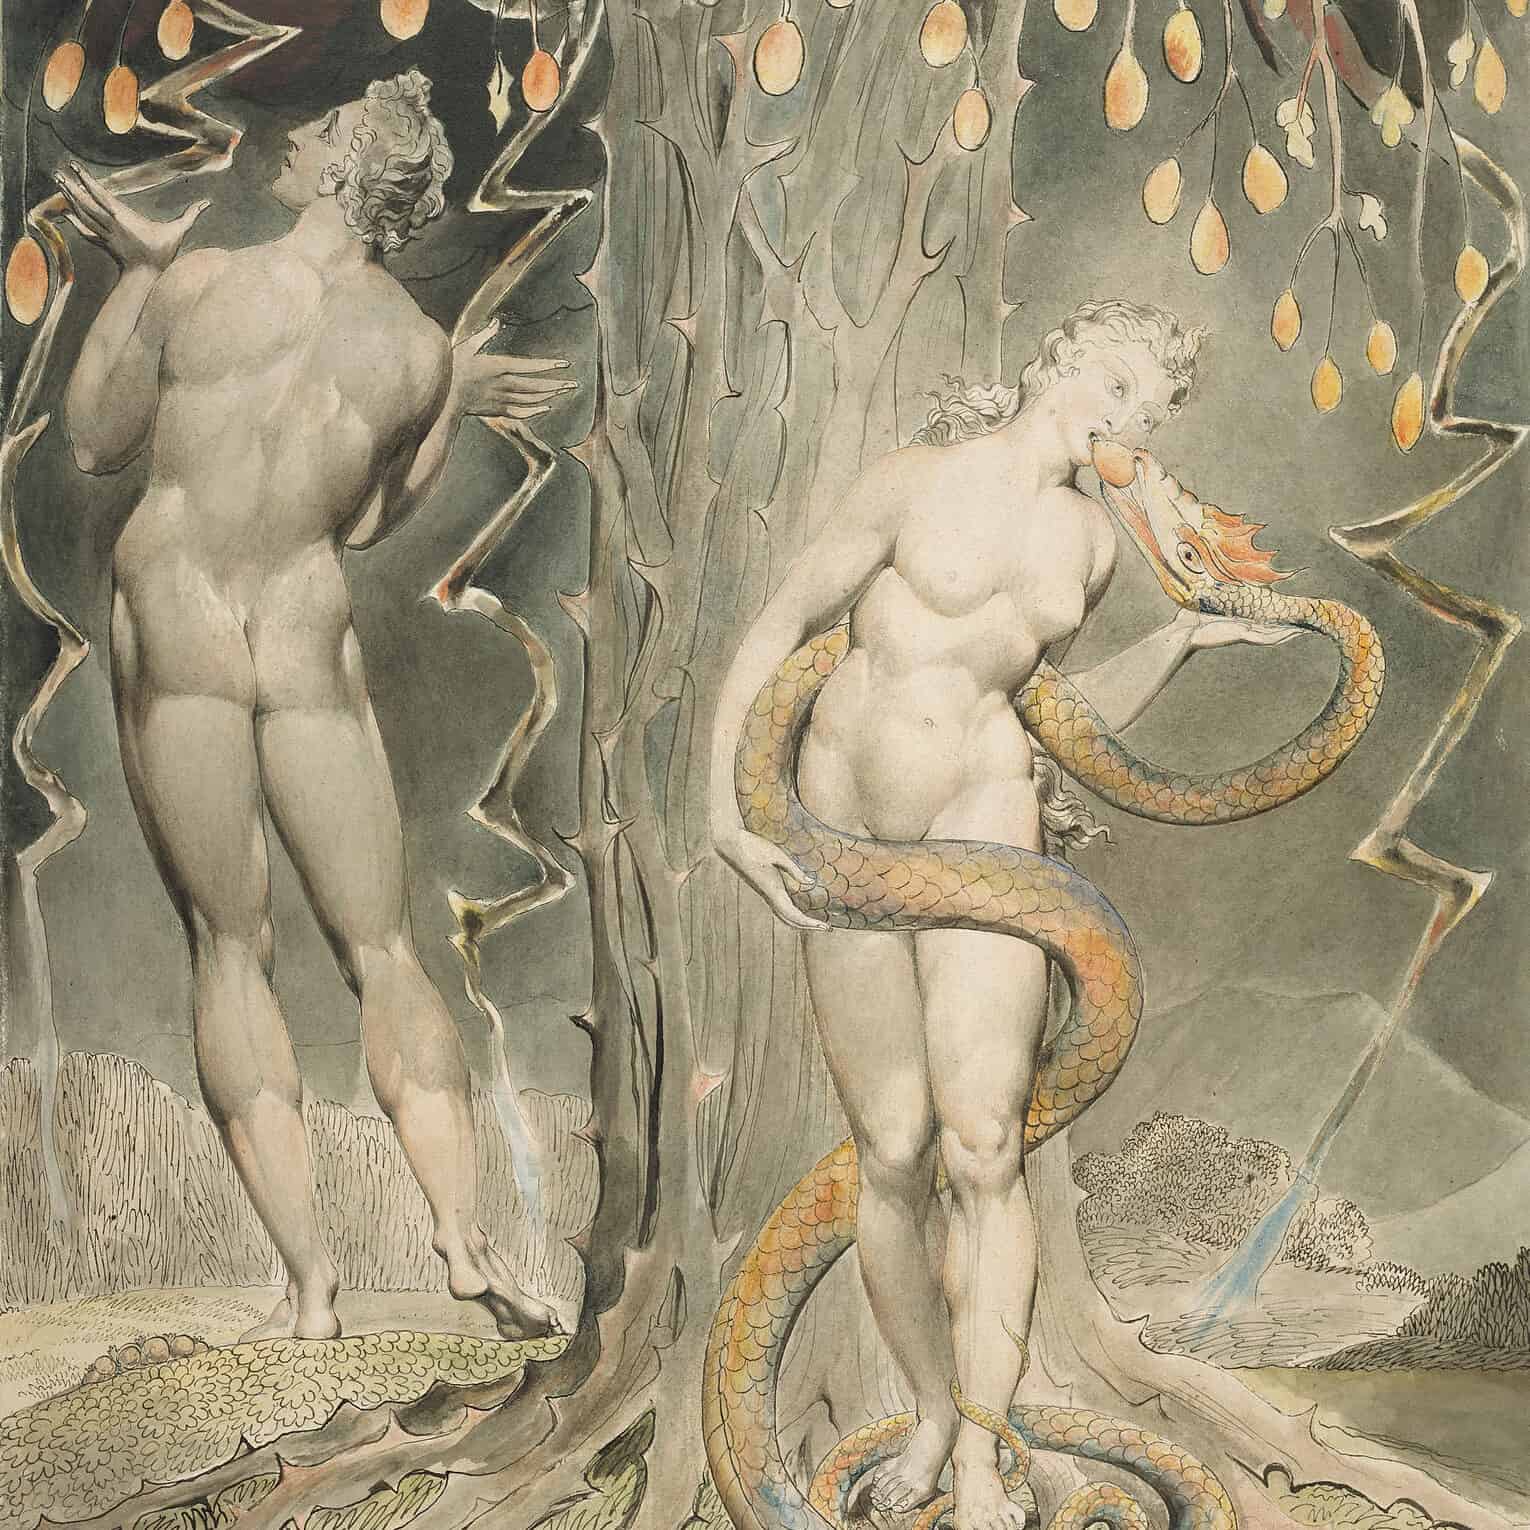 William Blake - The Temptation and Fall of Eve (1808), illustration du Paradis perdu de Milton